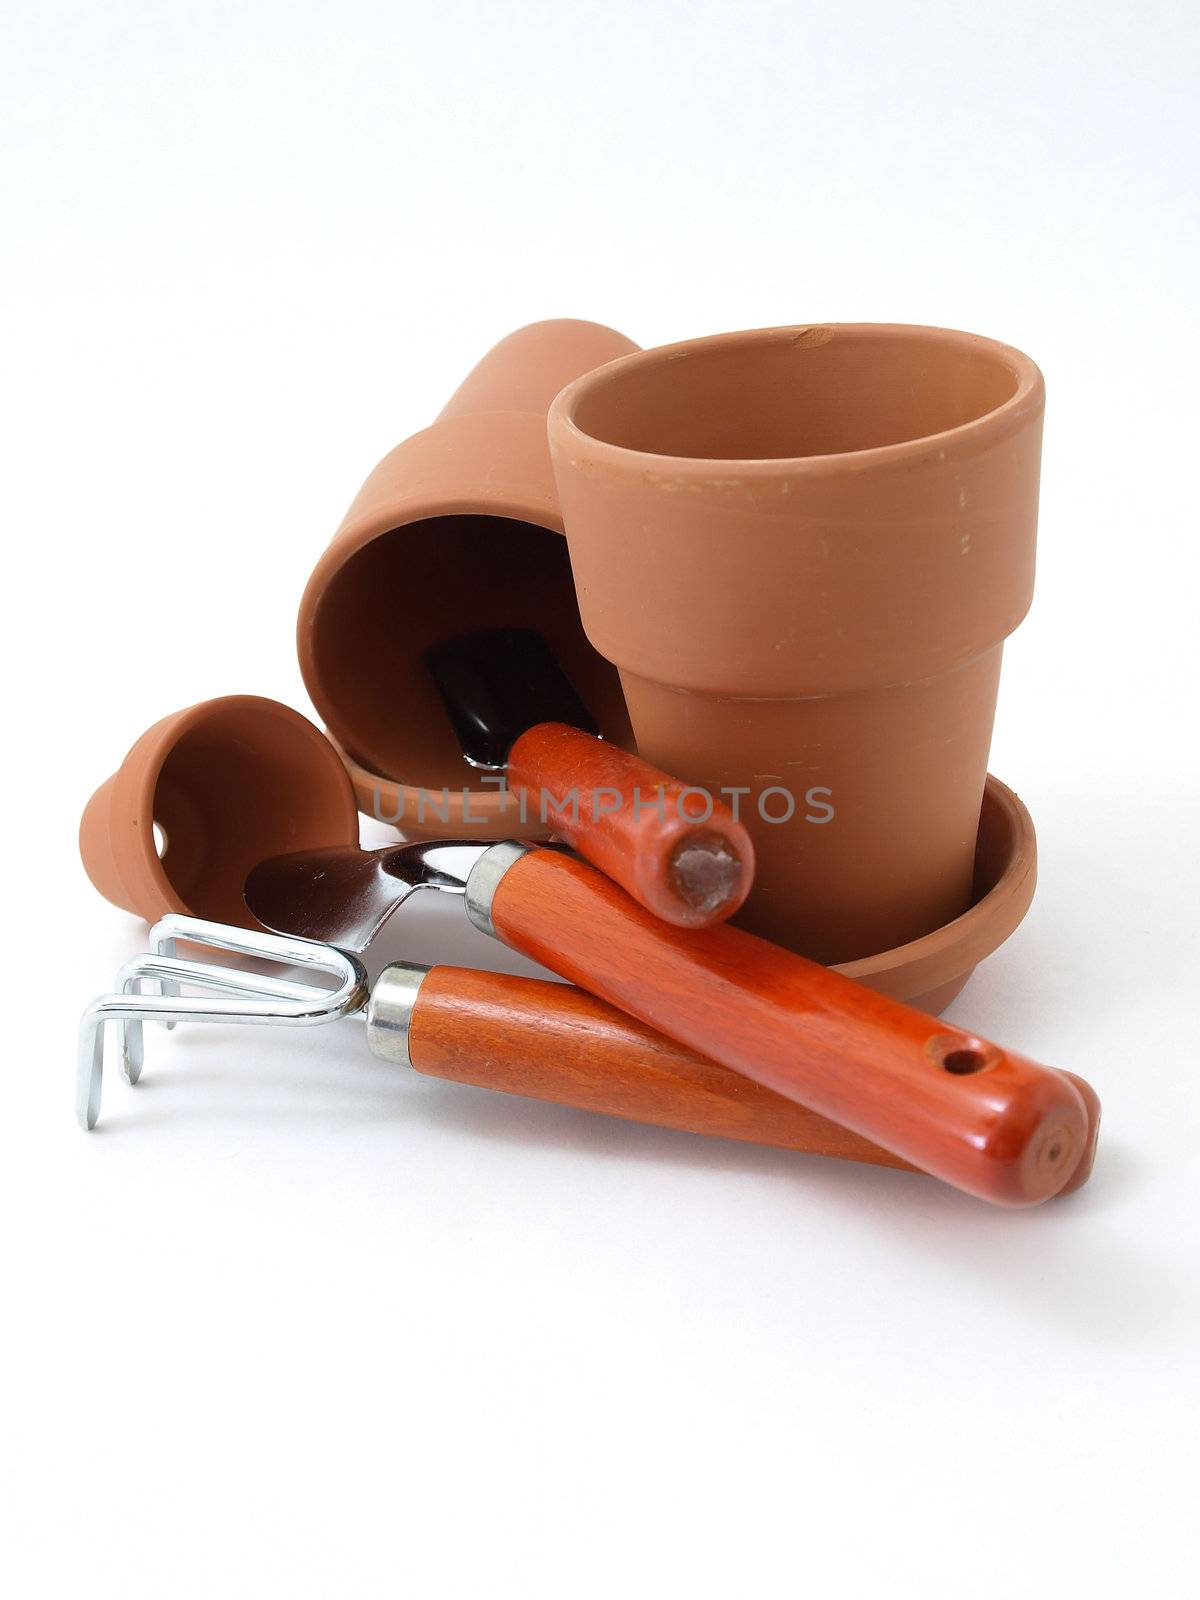 Empty Orange Gardening Pots and Tools by RGebbiePhoto